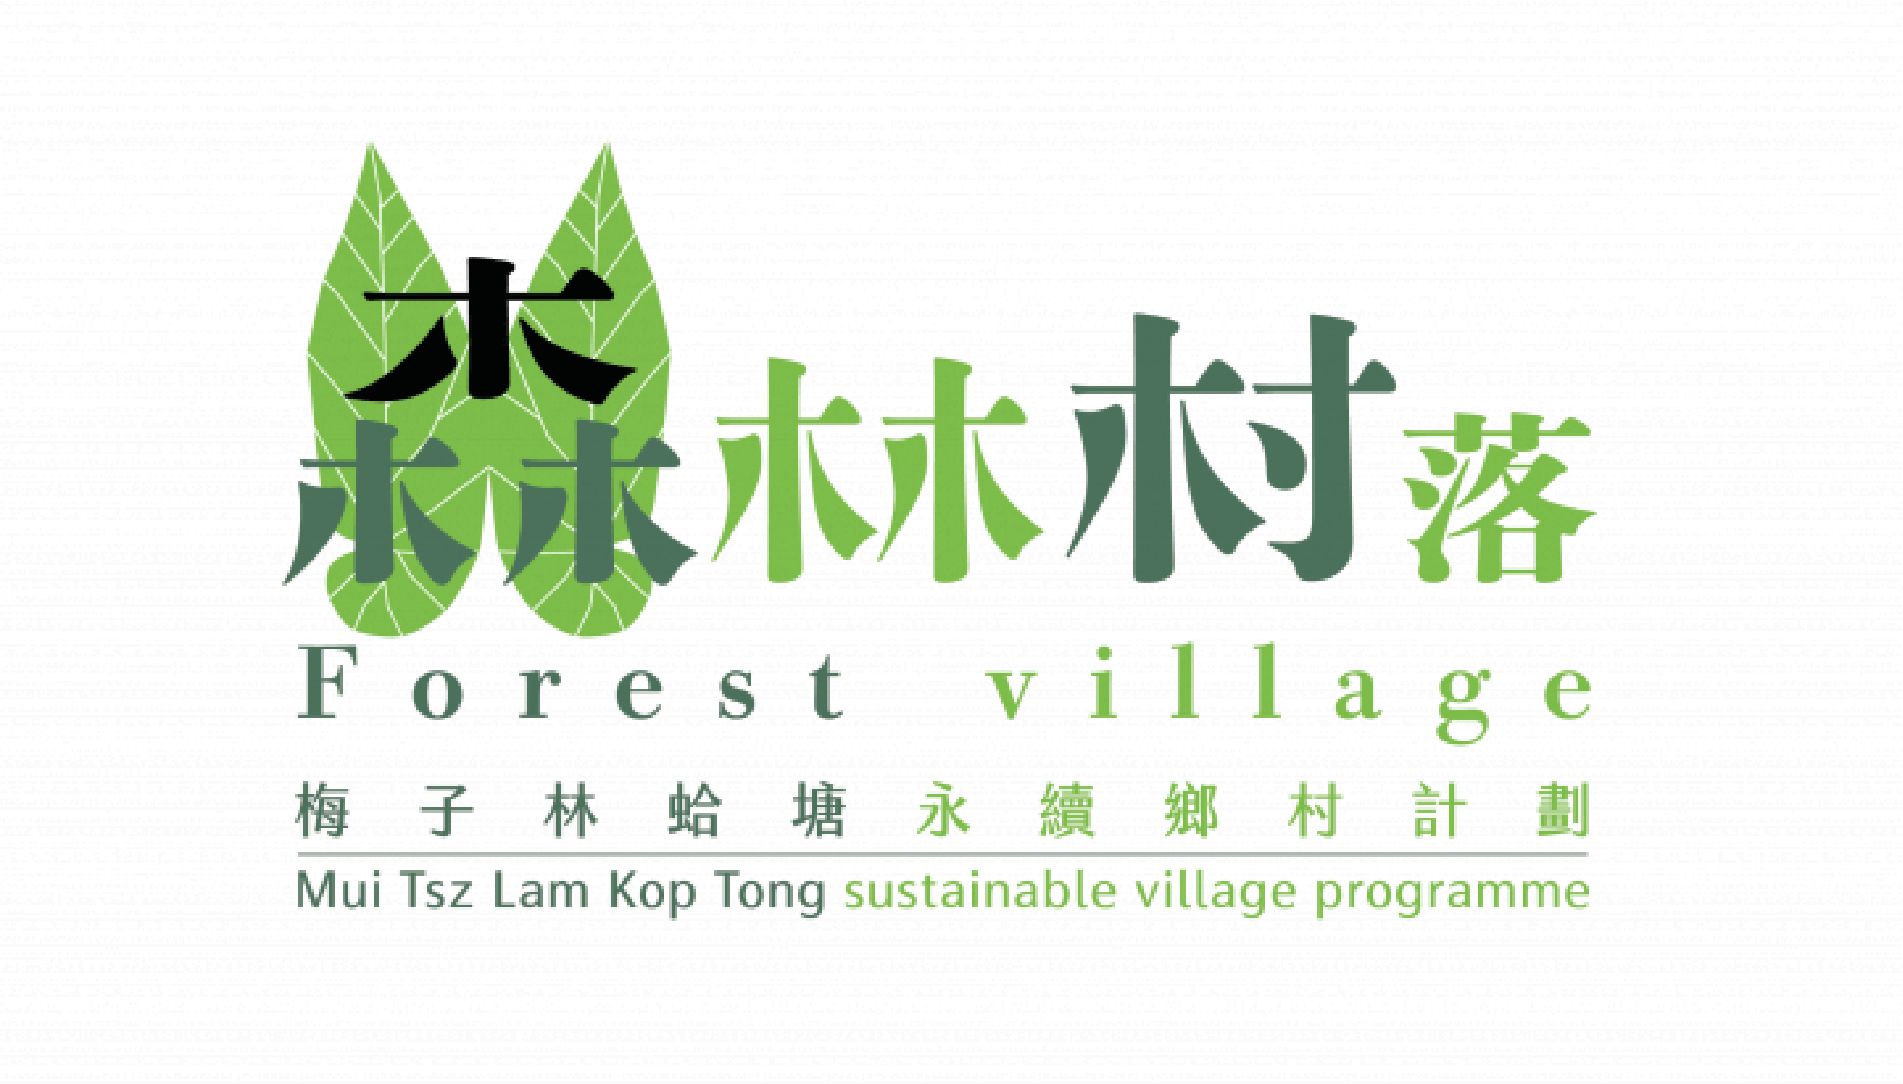 Forest Village – Mui Tsz Lam and Kop Tong sustainable village programme